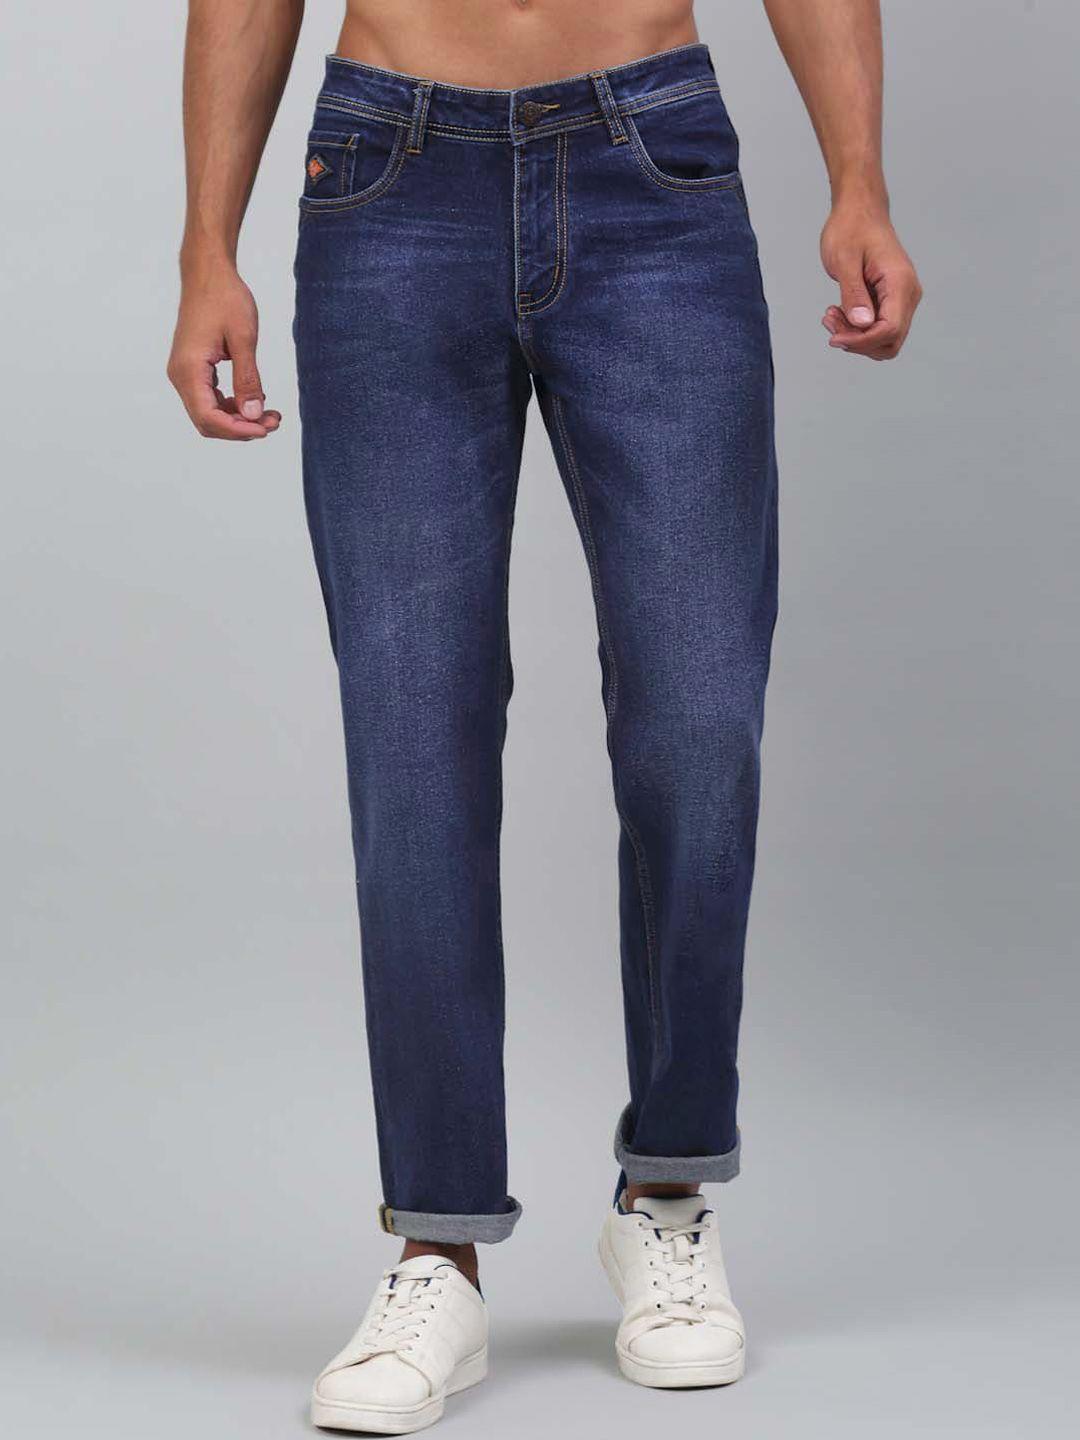 louis stitch men light fade clean look stretchable jeans